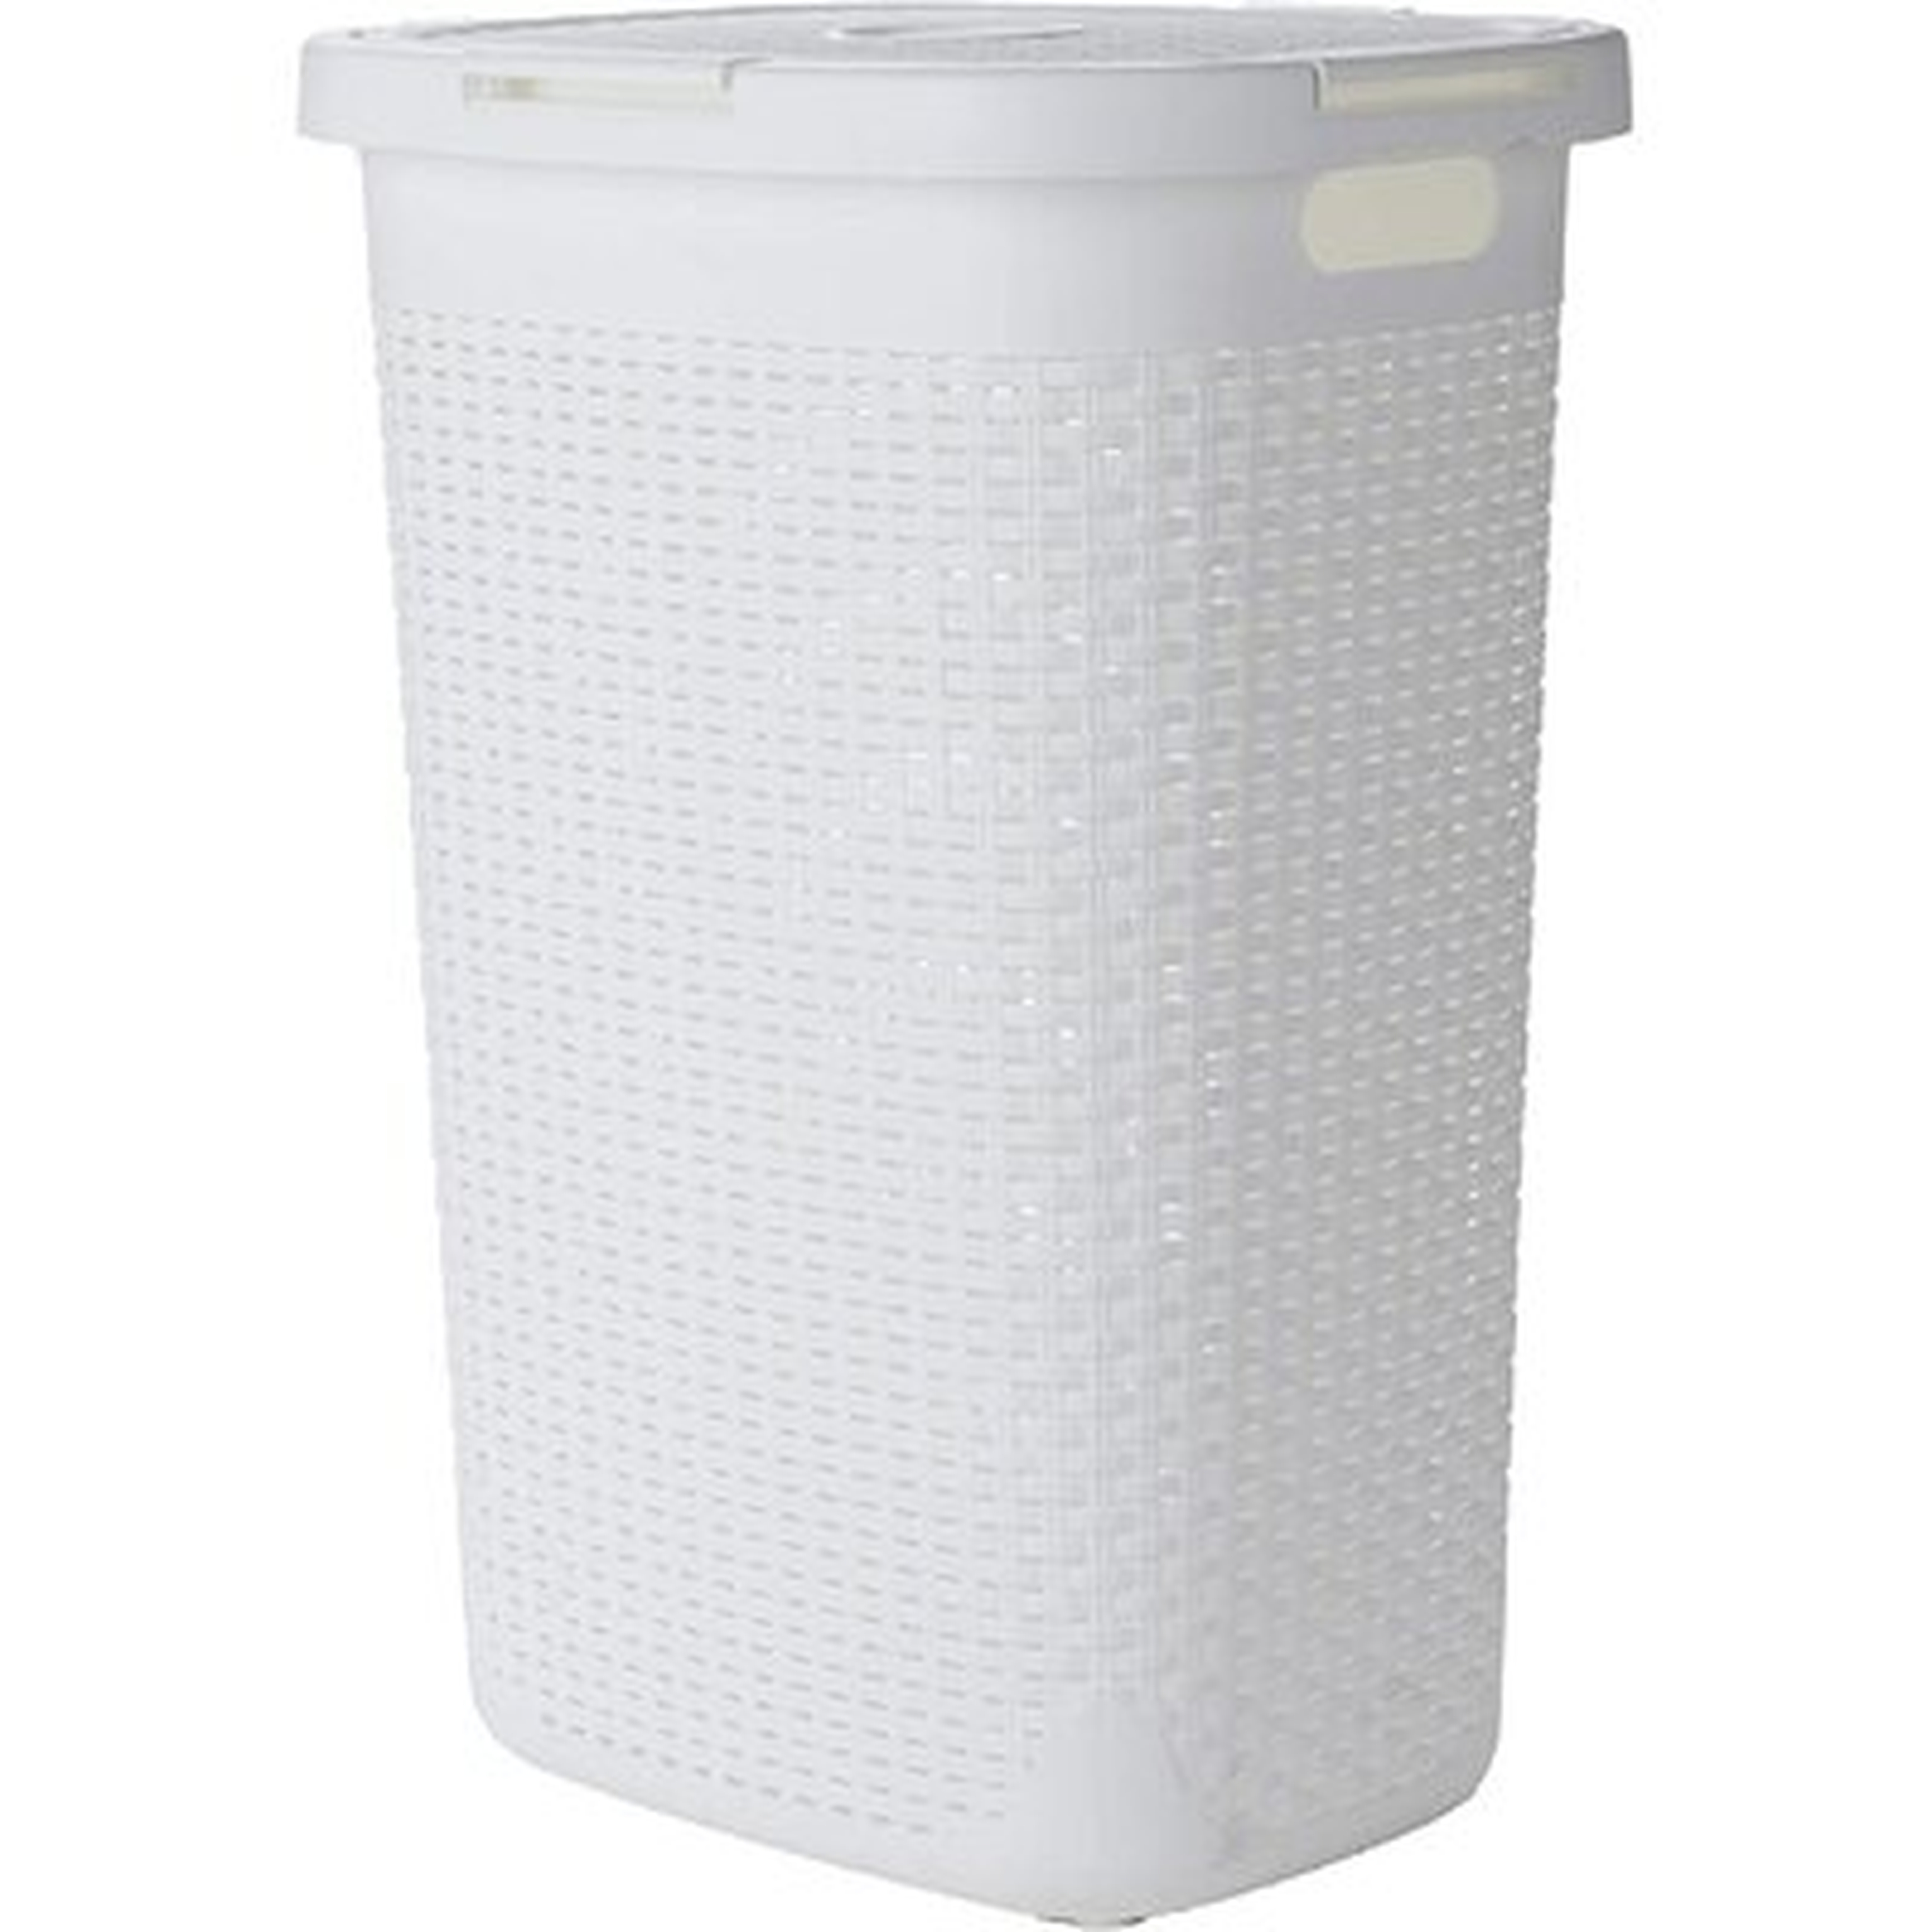 Basket Laundry Hamper With Cutout Handles, Washing Bin, Dirty Clothes Storage, Bathroom, Bedroom, Closet, 50 Liter - Wayfair